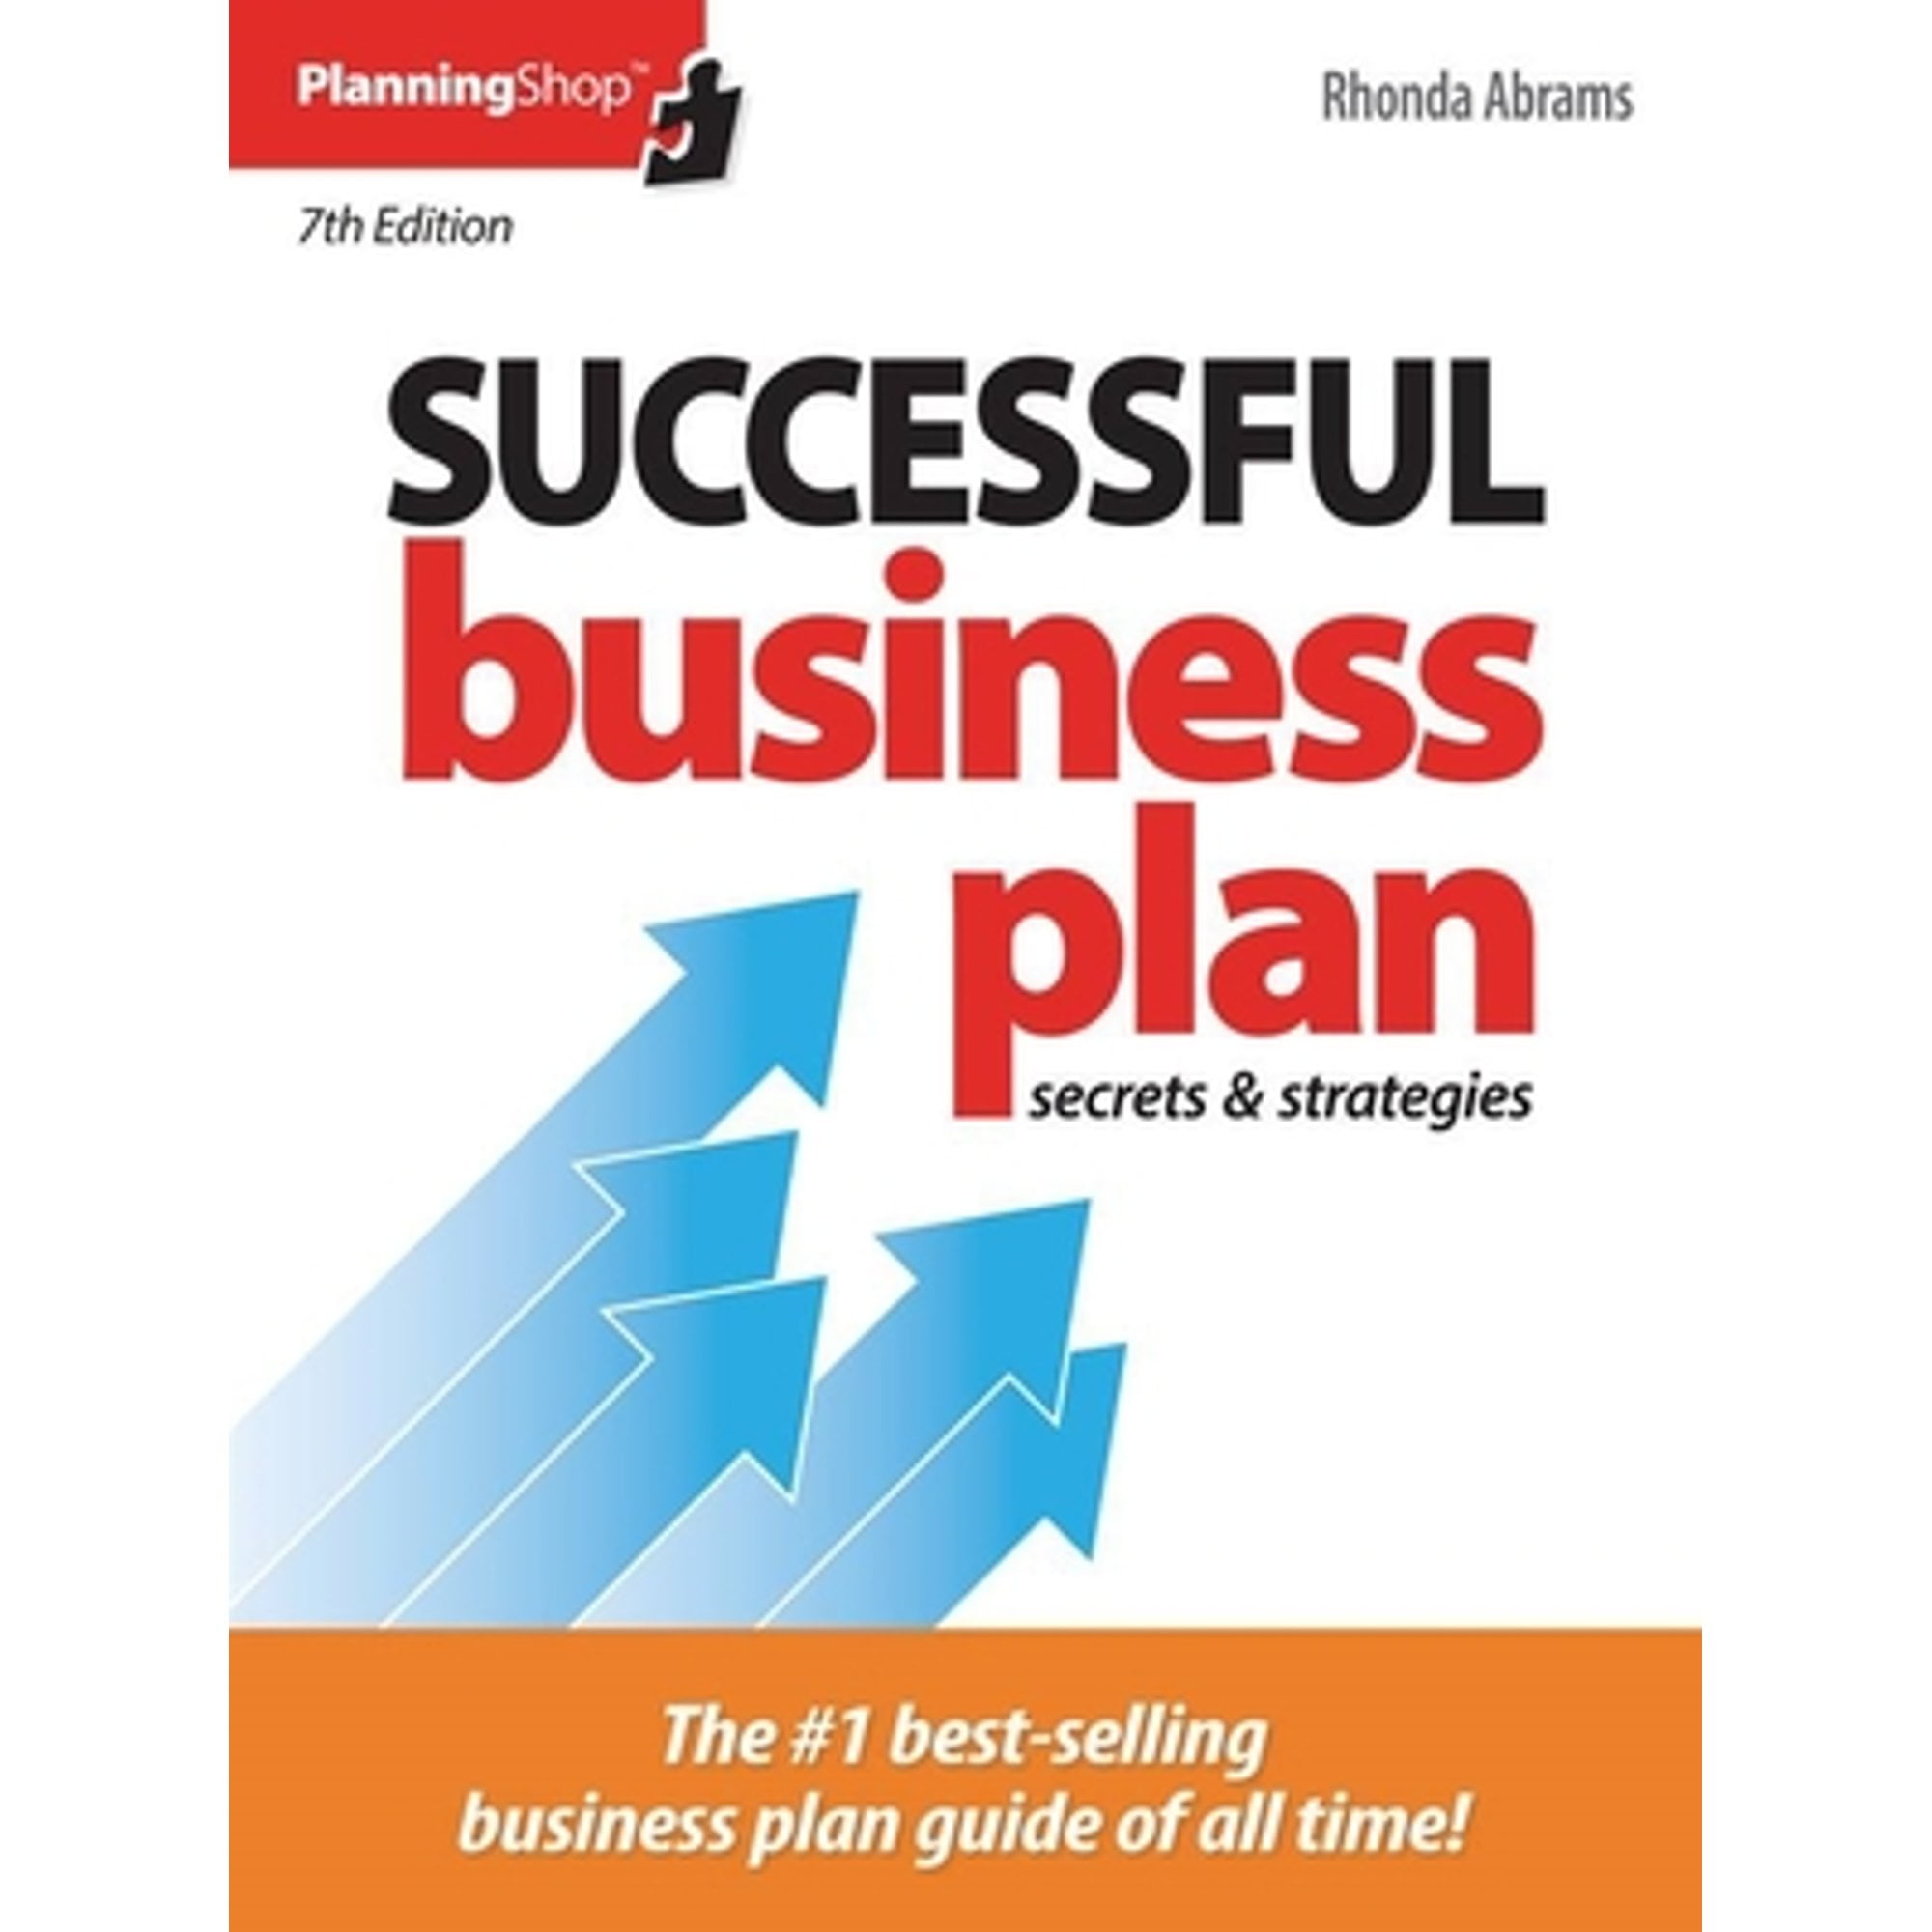 successful business plan secrets & strategies rhonda abrams pdf